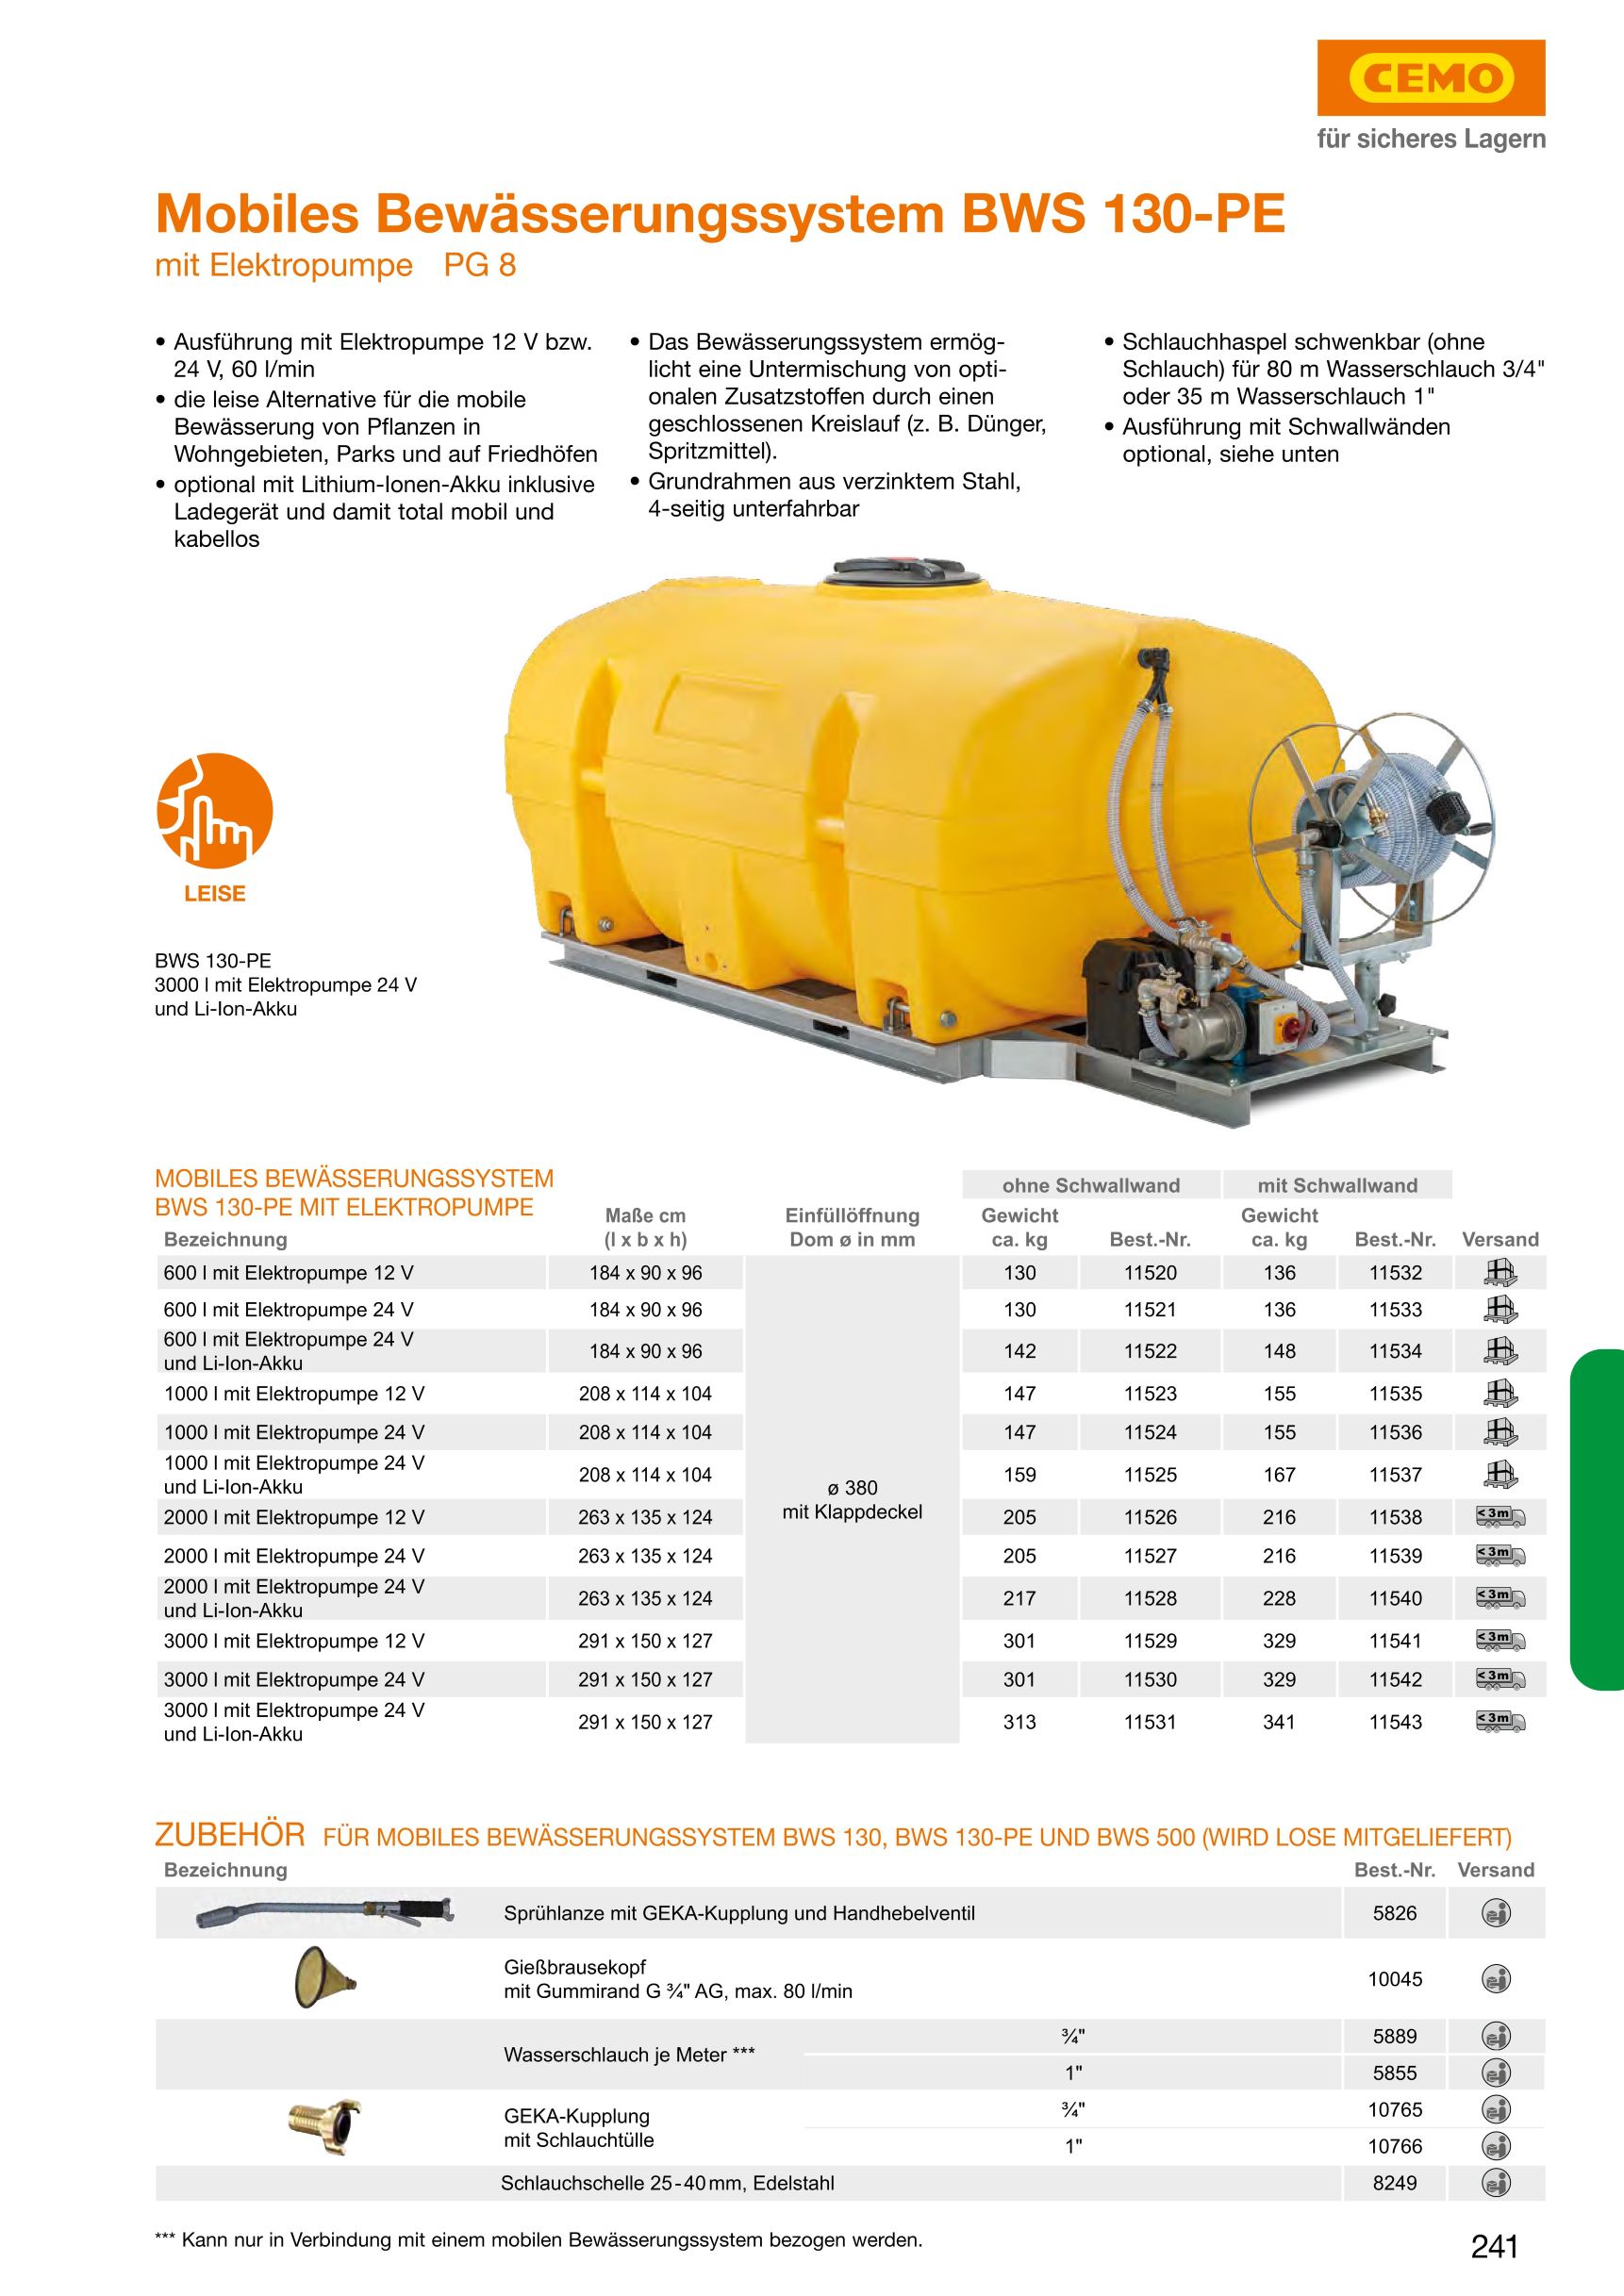 CEMO Mobiles Bewässerungssystem BWS 130-PE, 2000 l, Motorpumpe, Schwallwände - 10929